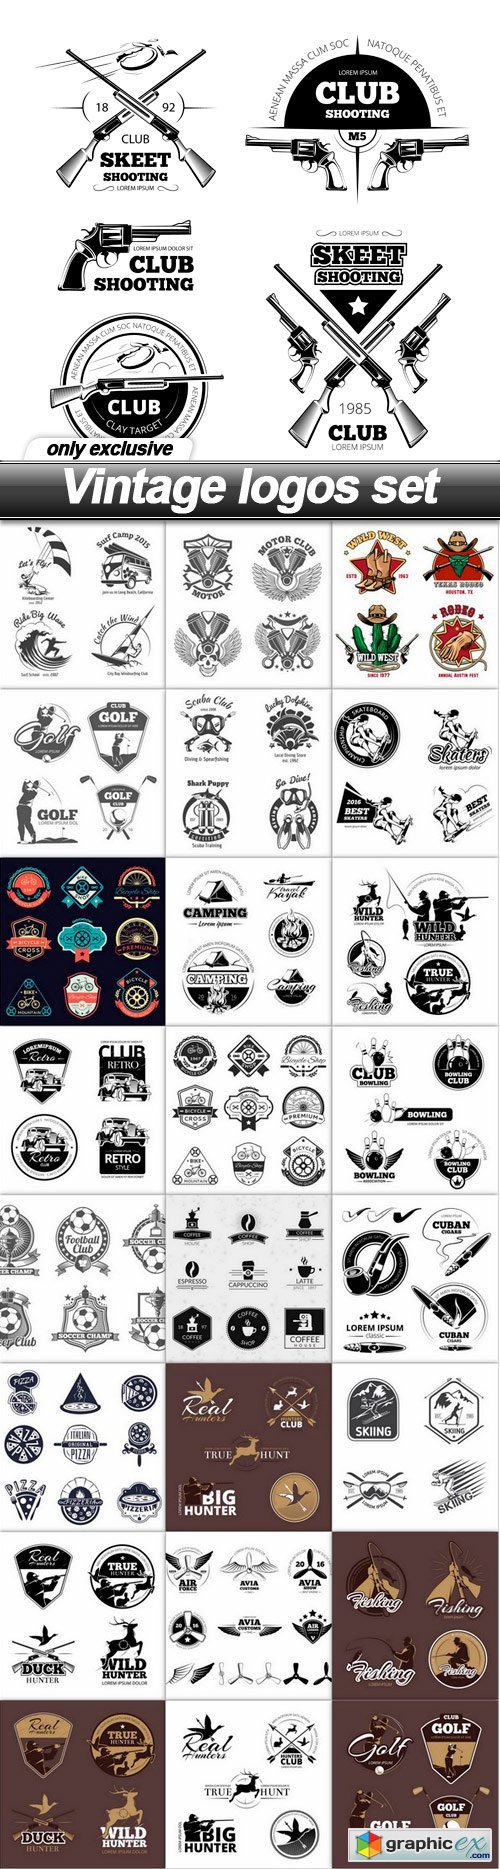  Vintage logos set - 25 EPS